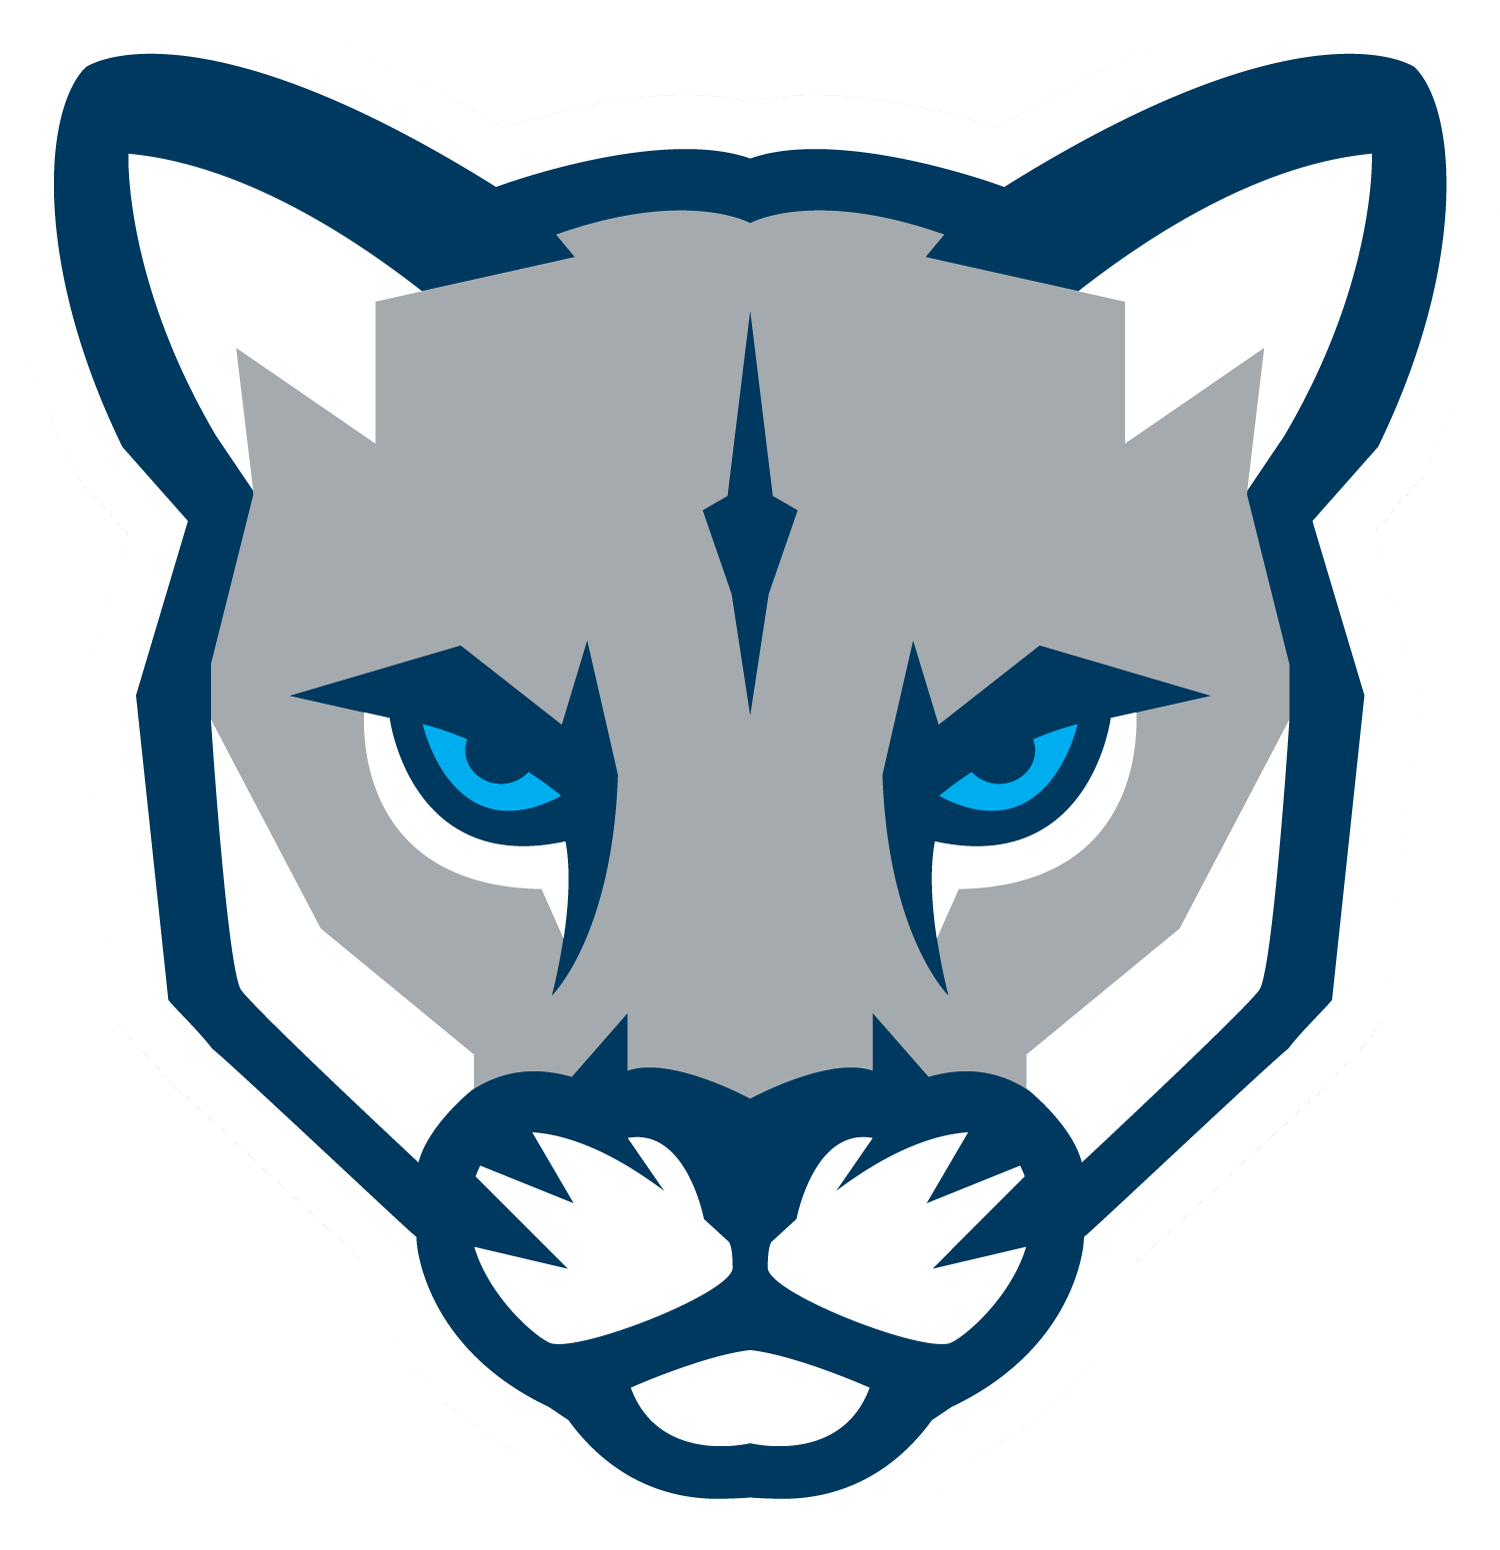 Mru Cougars New Primary Logo - Mount Royal Cougars (1500x1550)